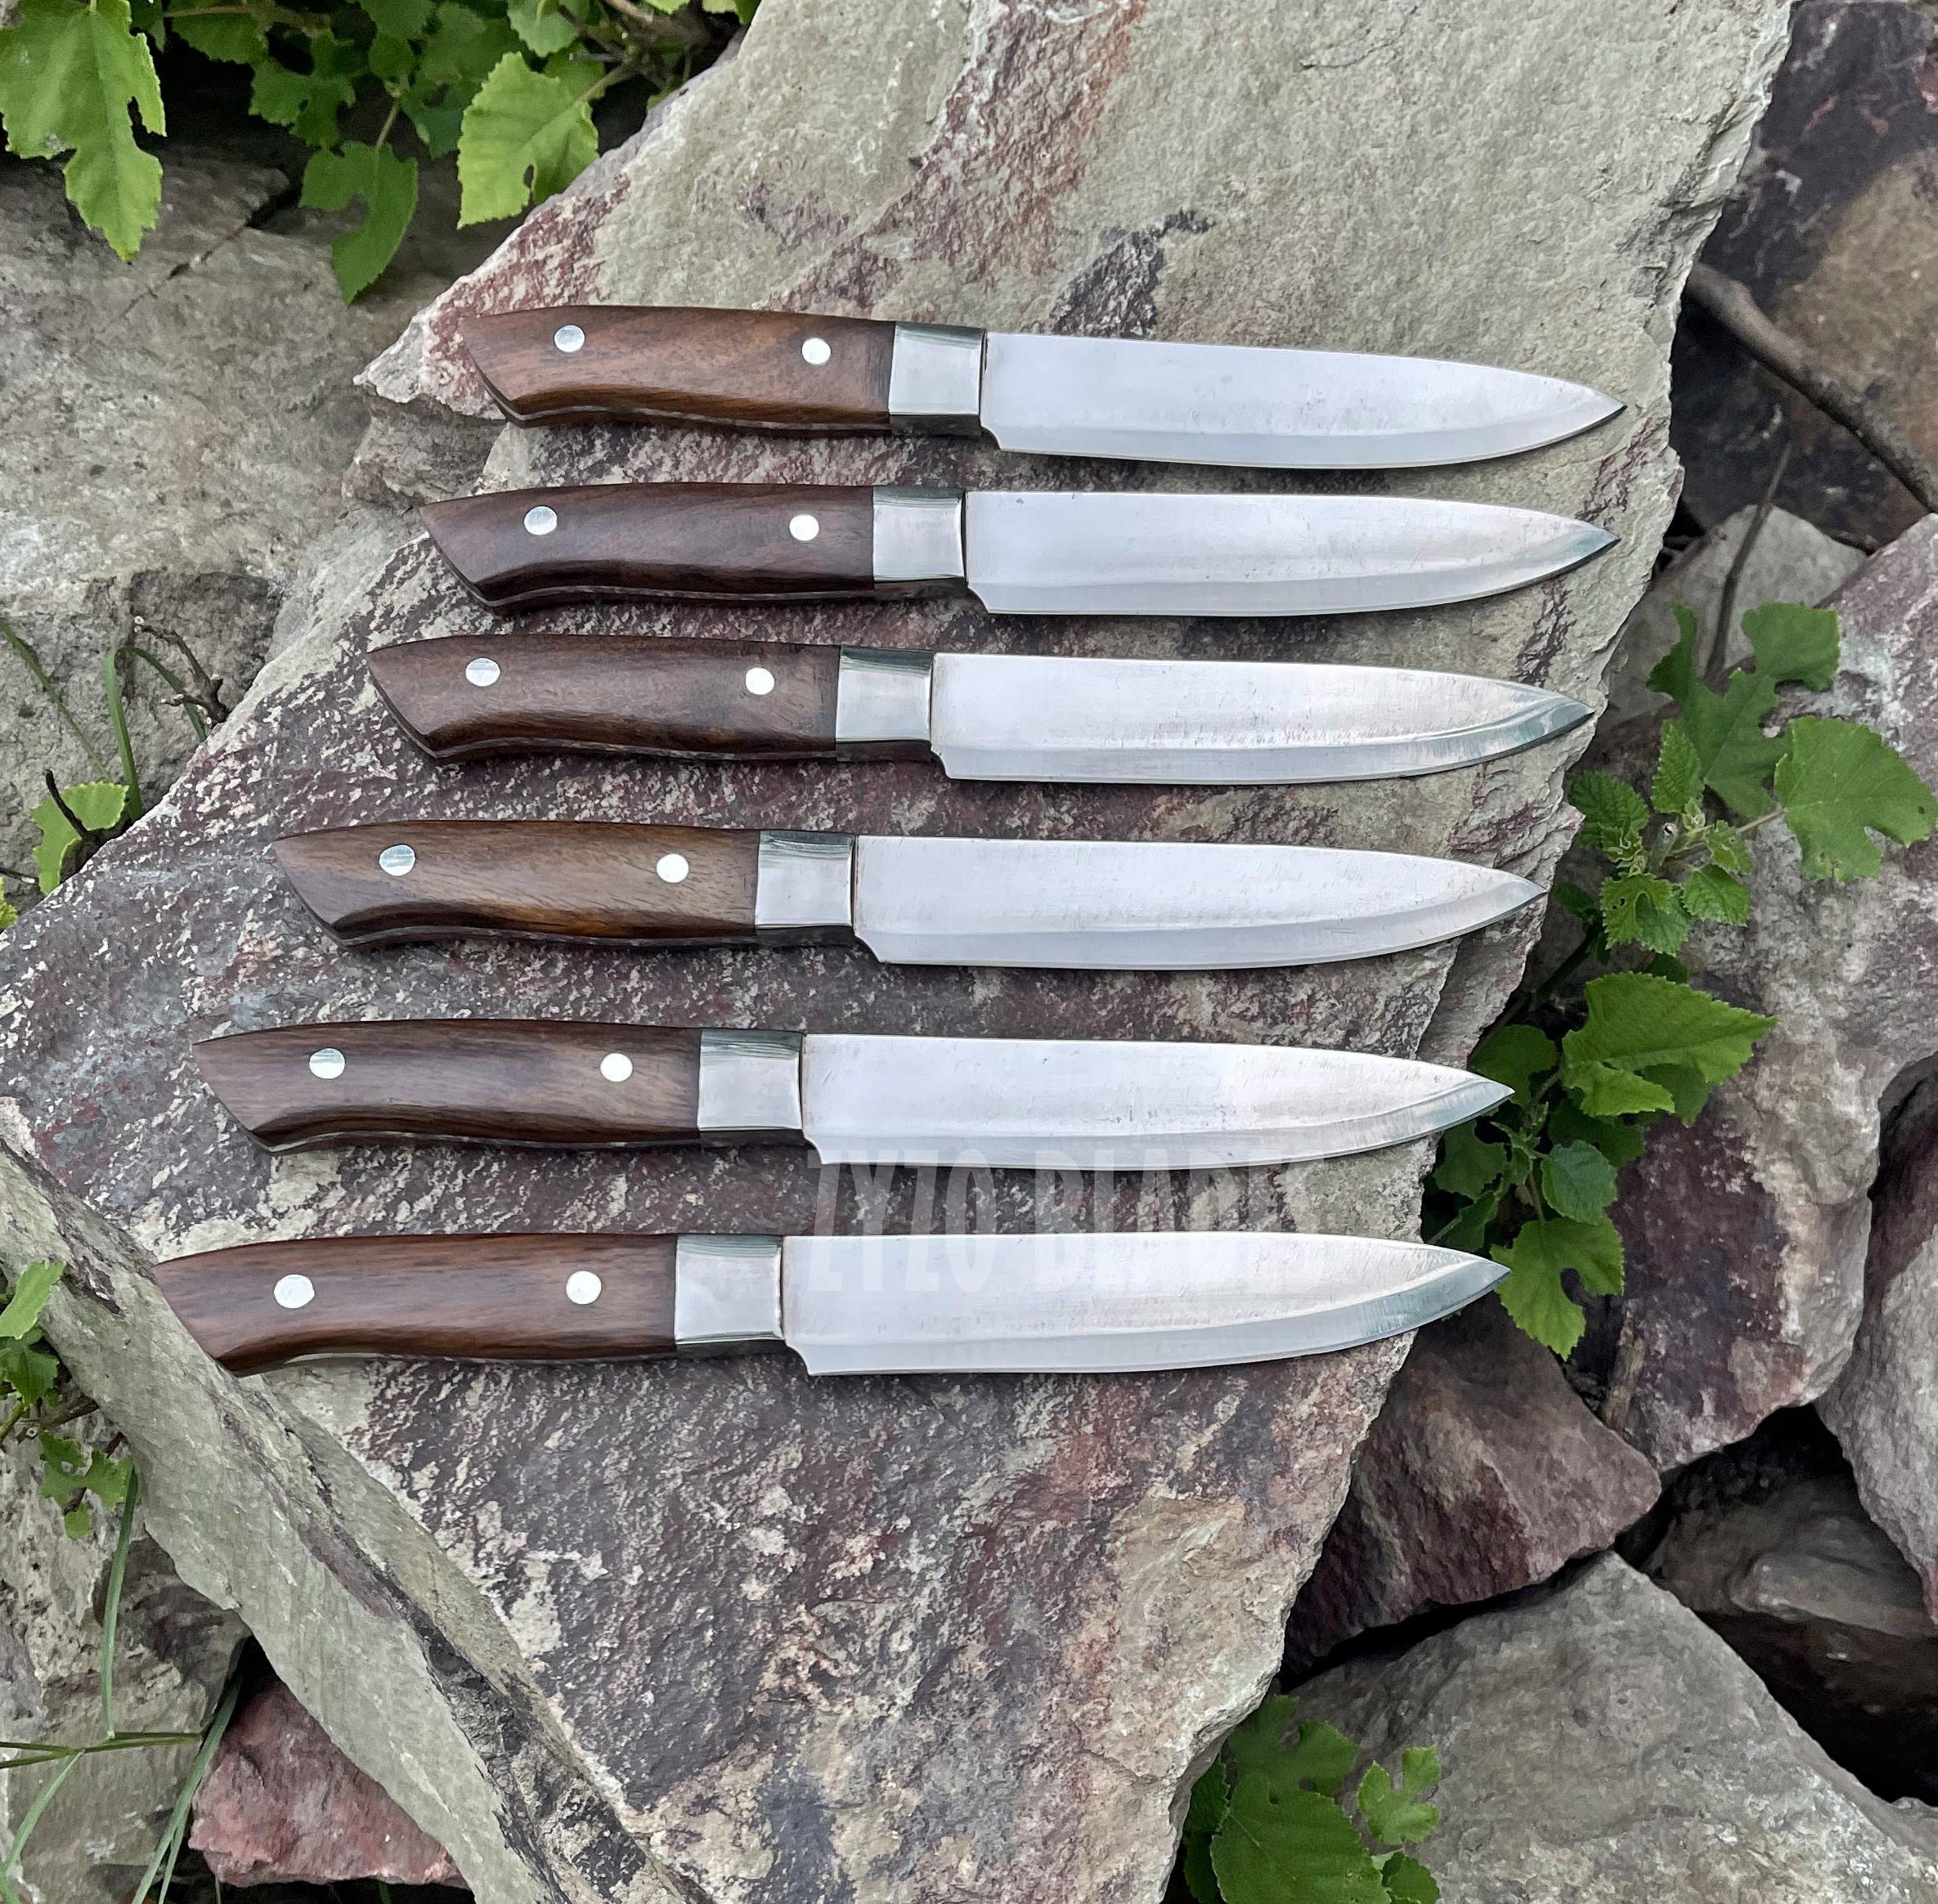 TopKnife Laguiole 6 Pcs Steak Knife Set - Stainless Steel Handle - Pine Wood Block